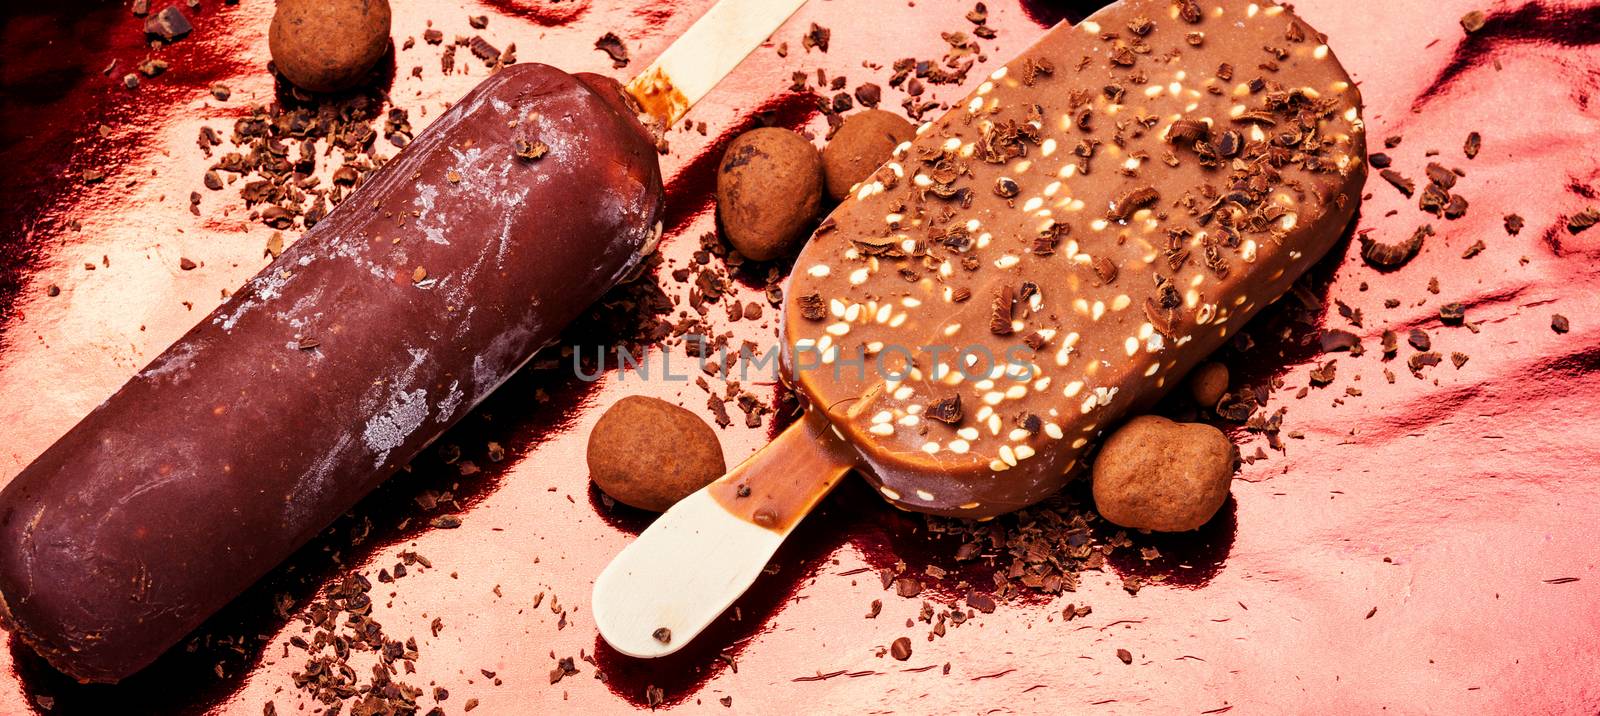 Popsicle ice cream chocolate.Chocolate ice cream on a stick